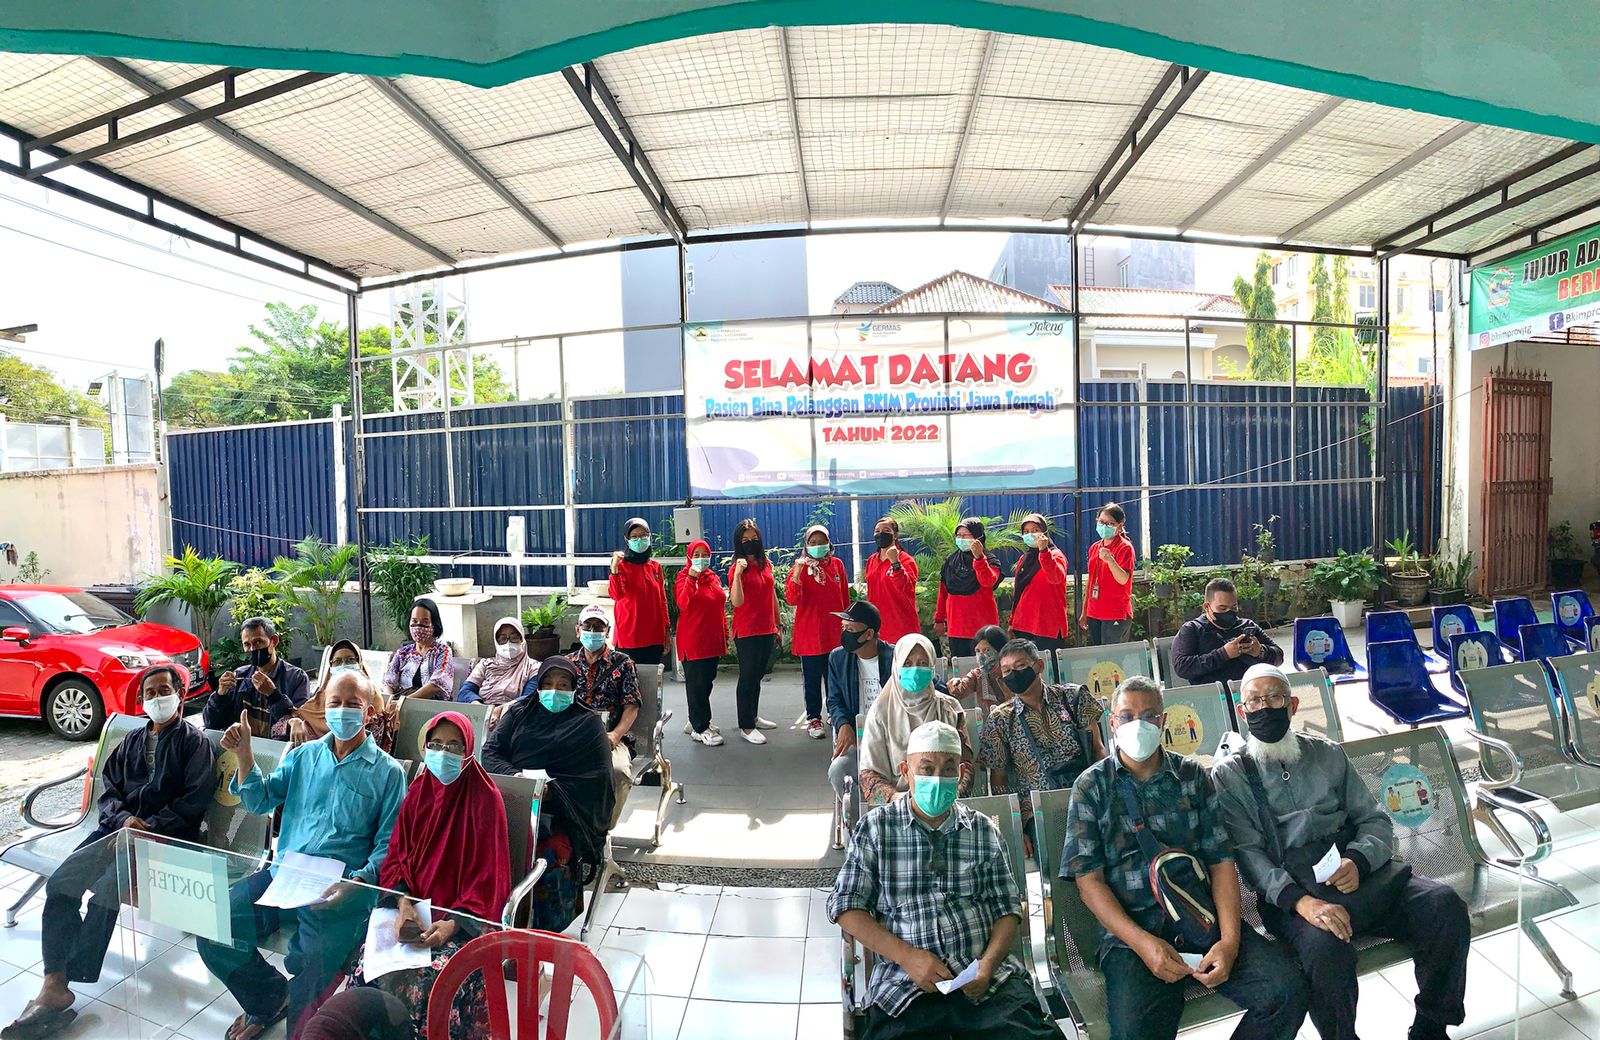 Bina Pelanggan BKIM Provinsi Jawa Tengah